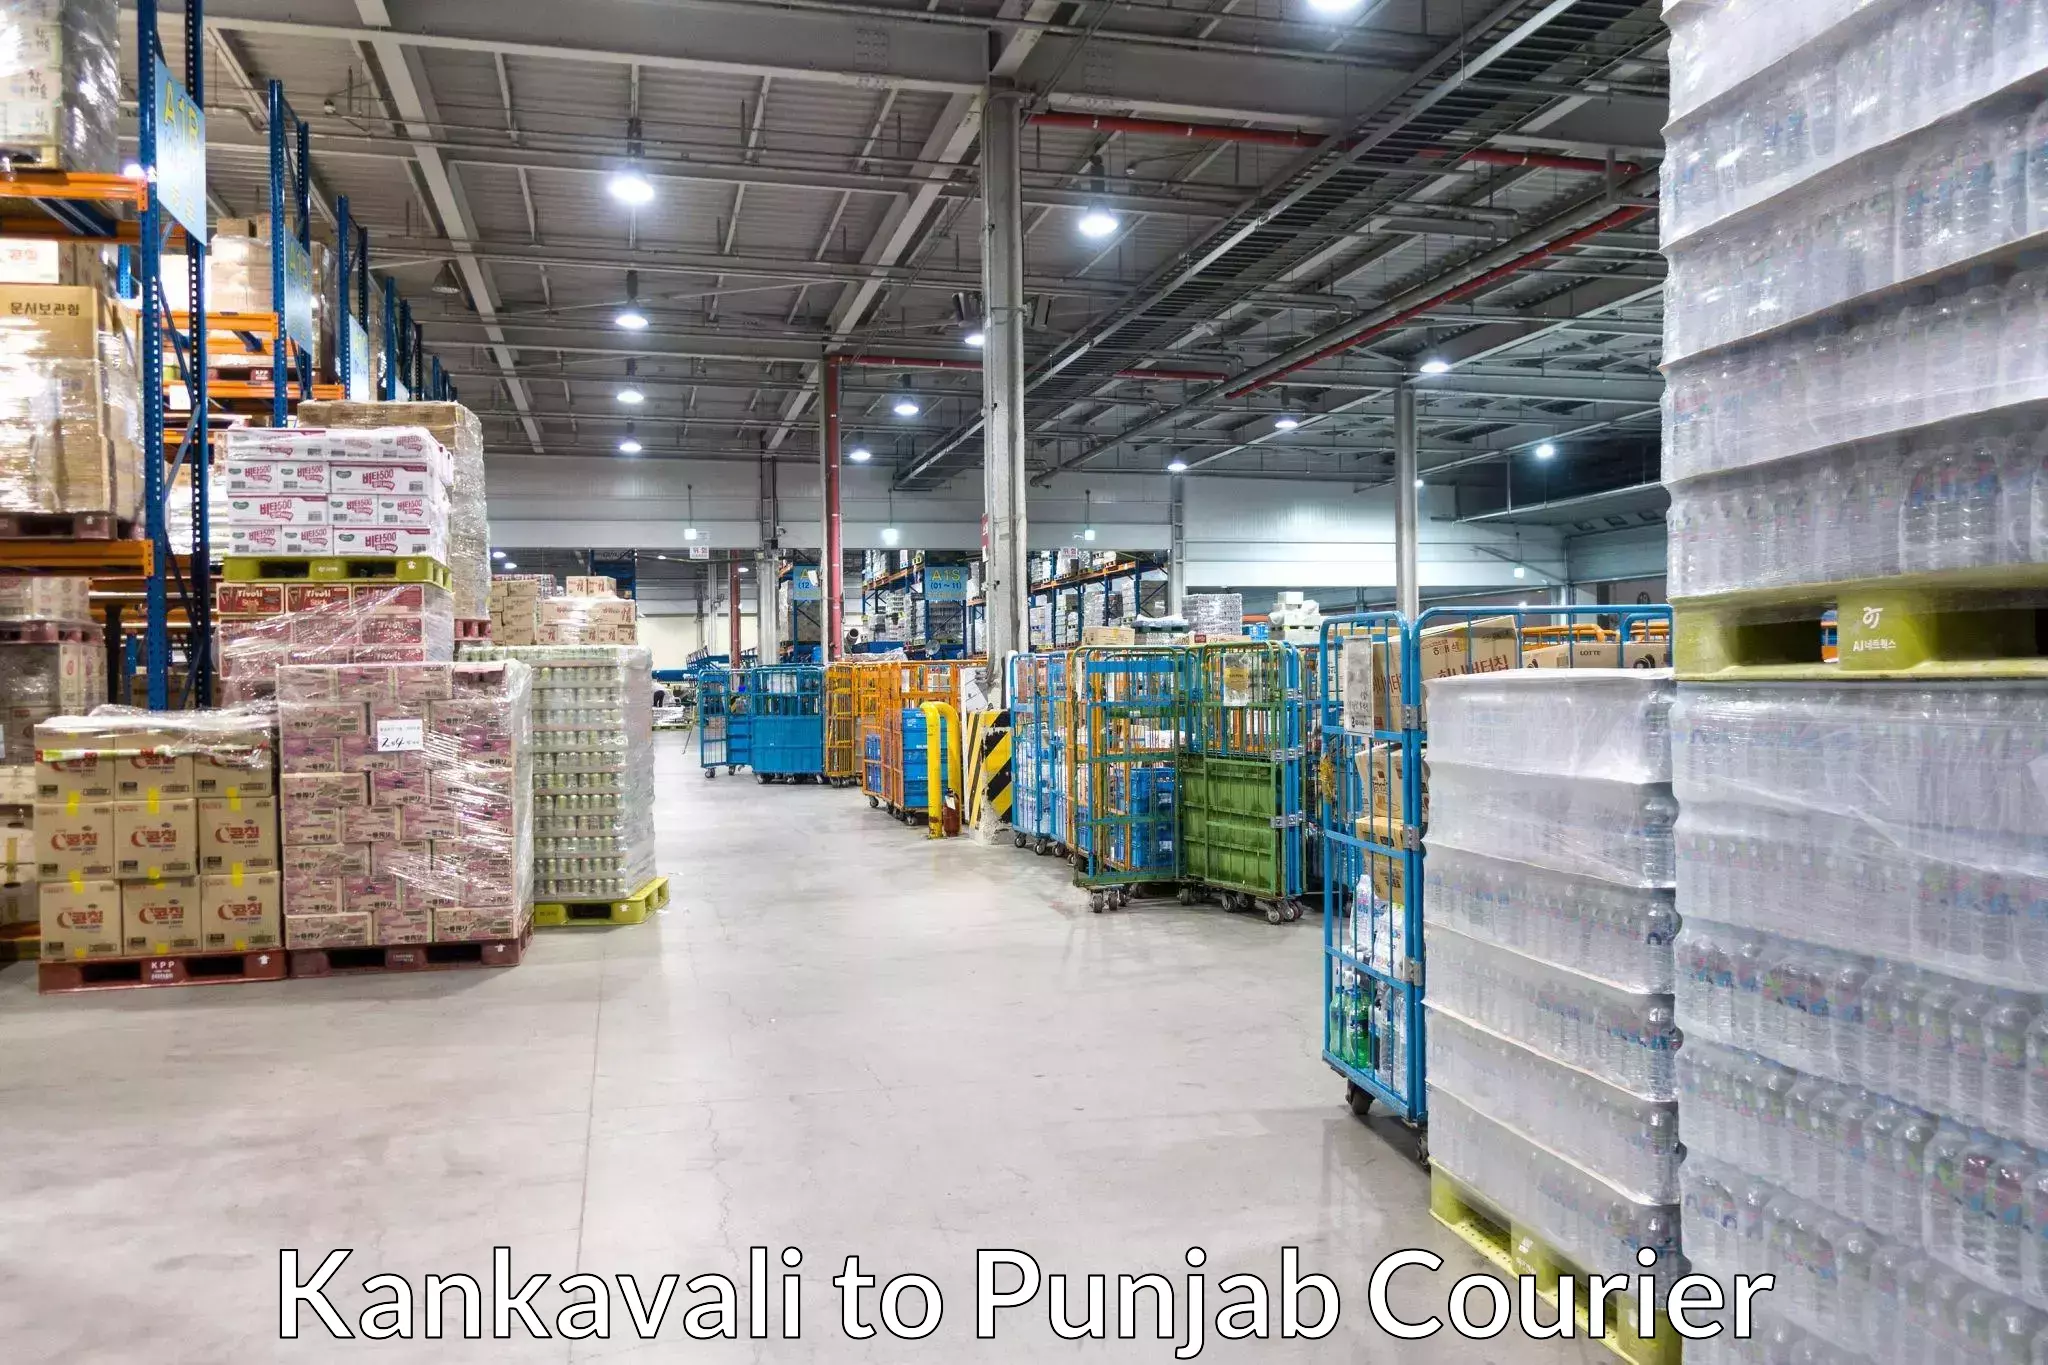 Courier service comparison Kankavali to Zirakpur